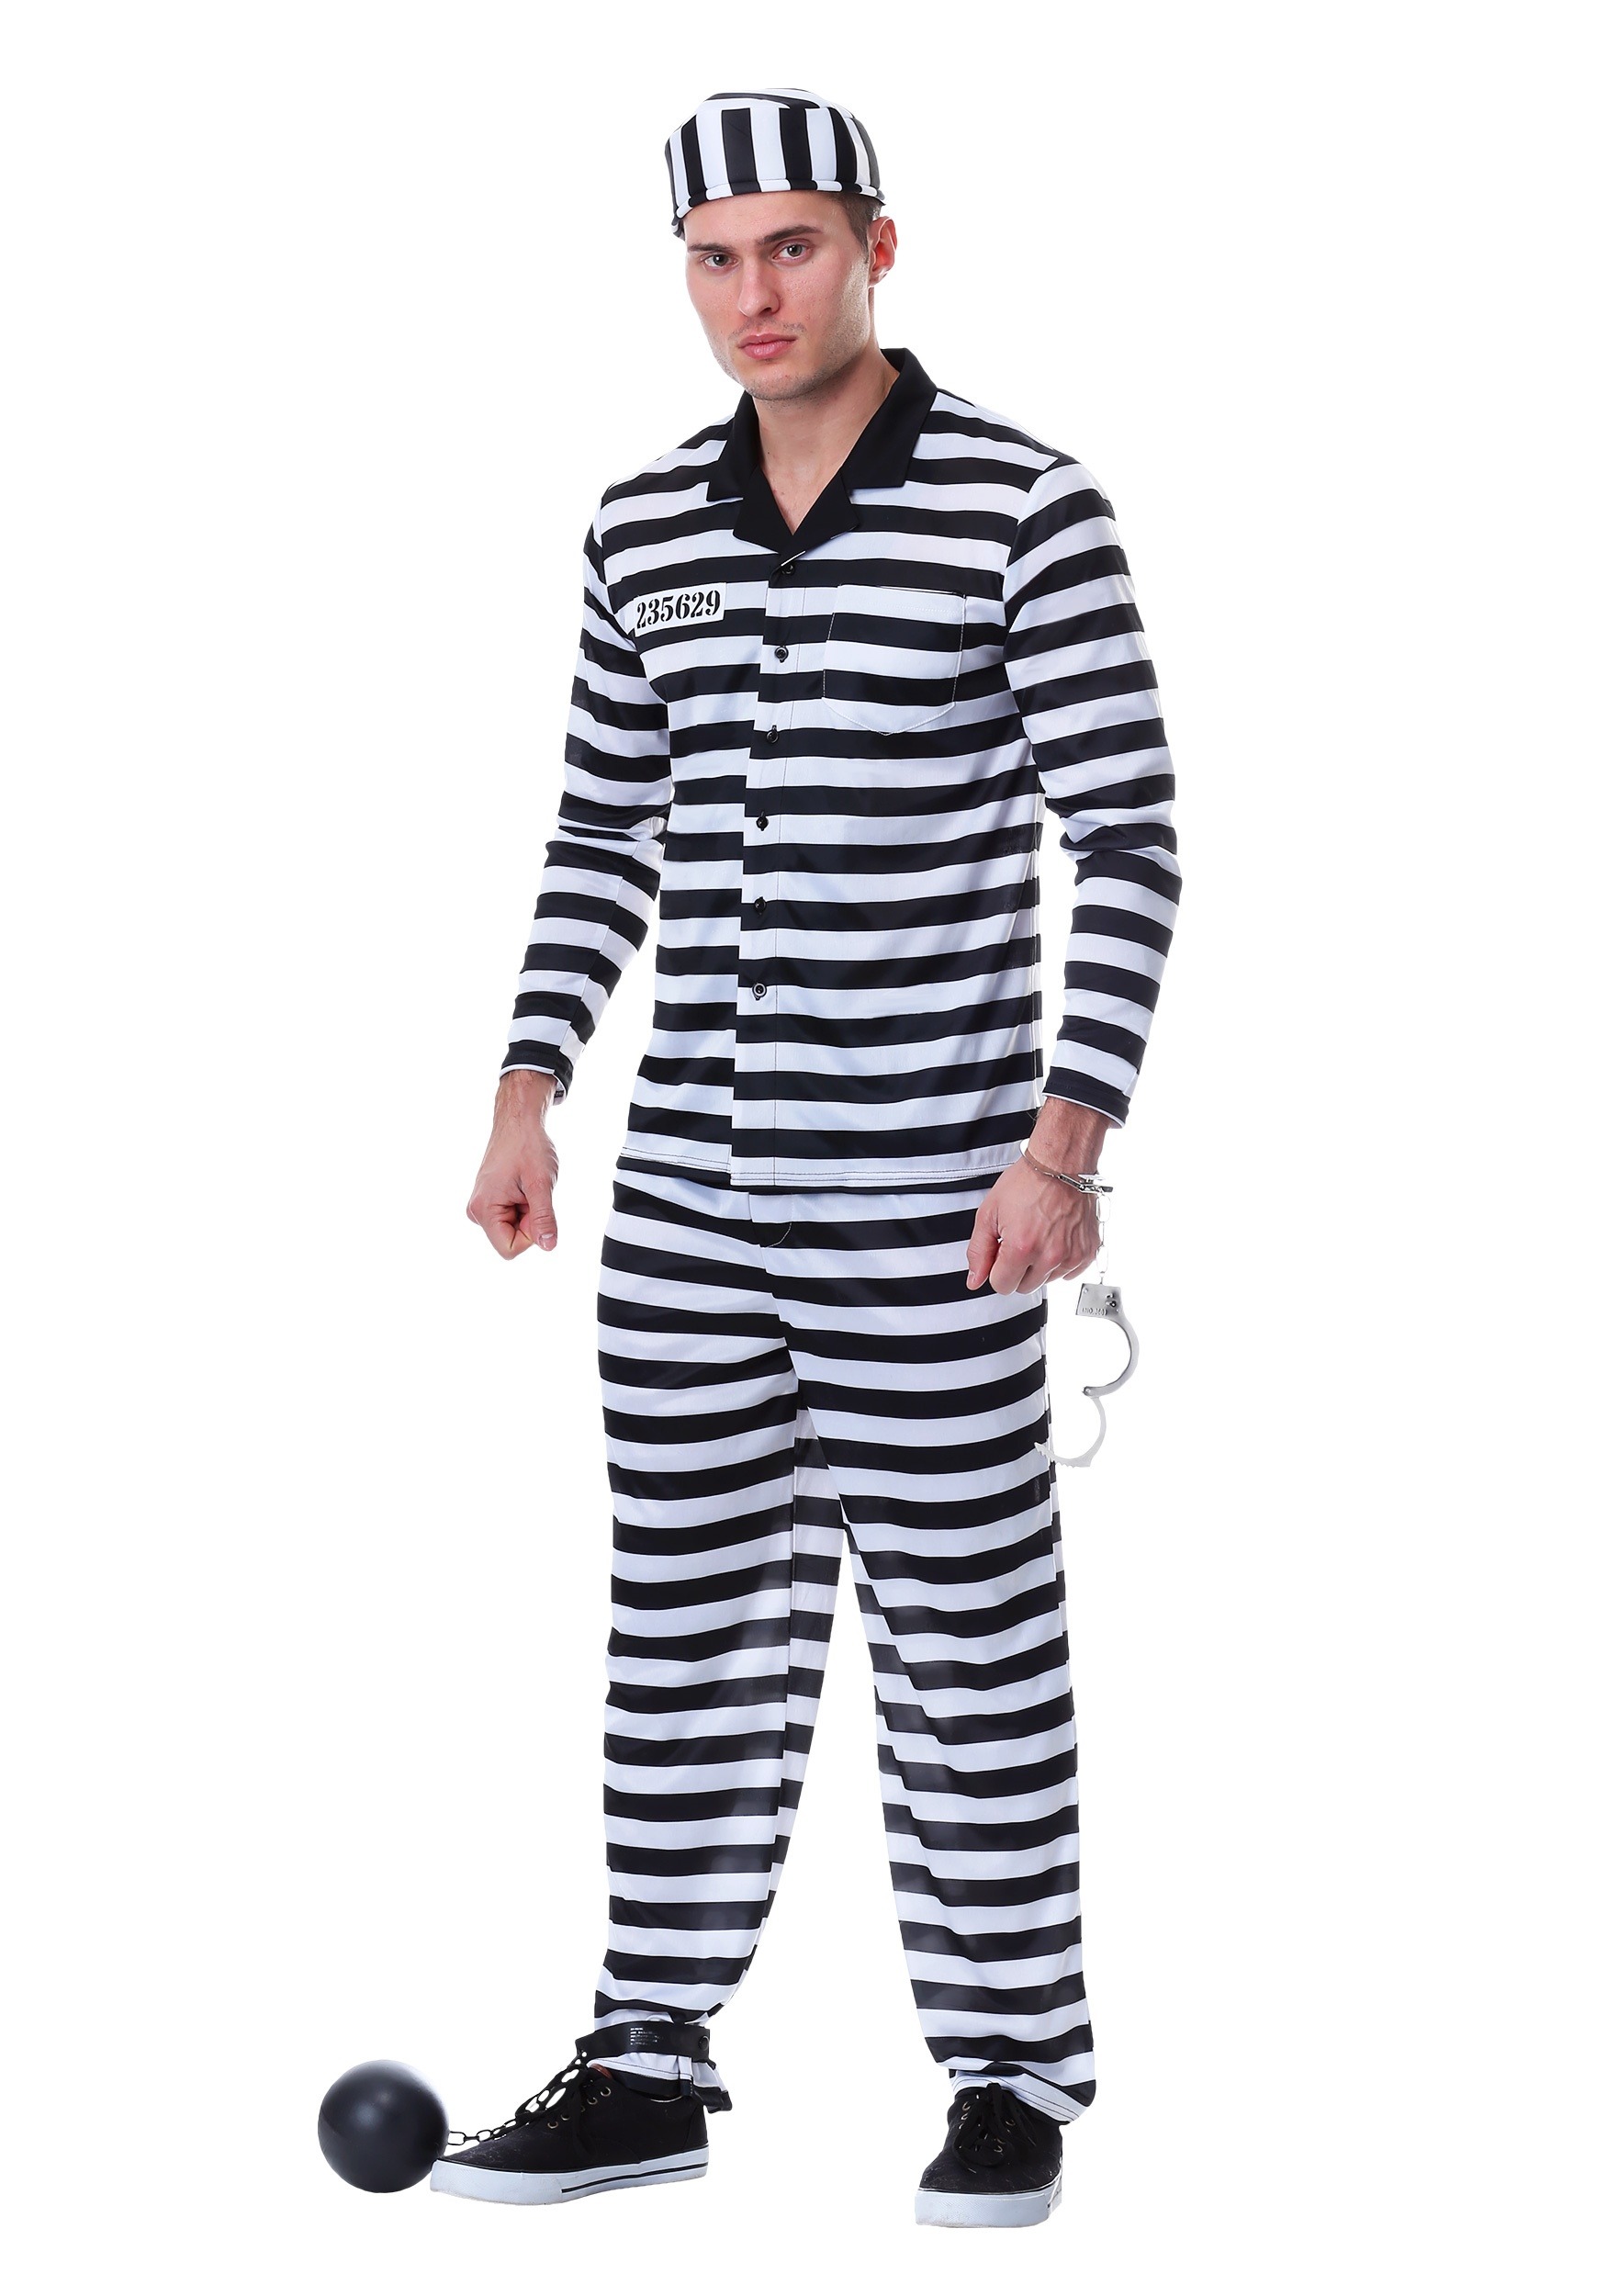 Men's Plus Size Deluxe Button Down Jailbird Costume